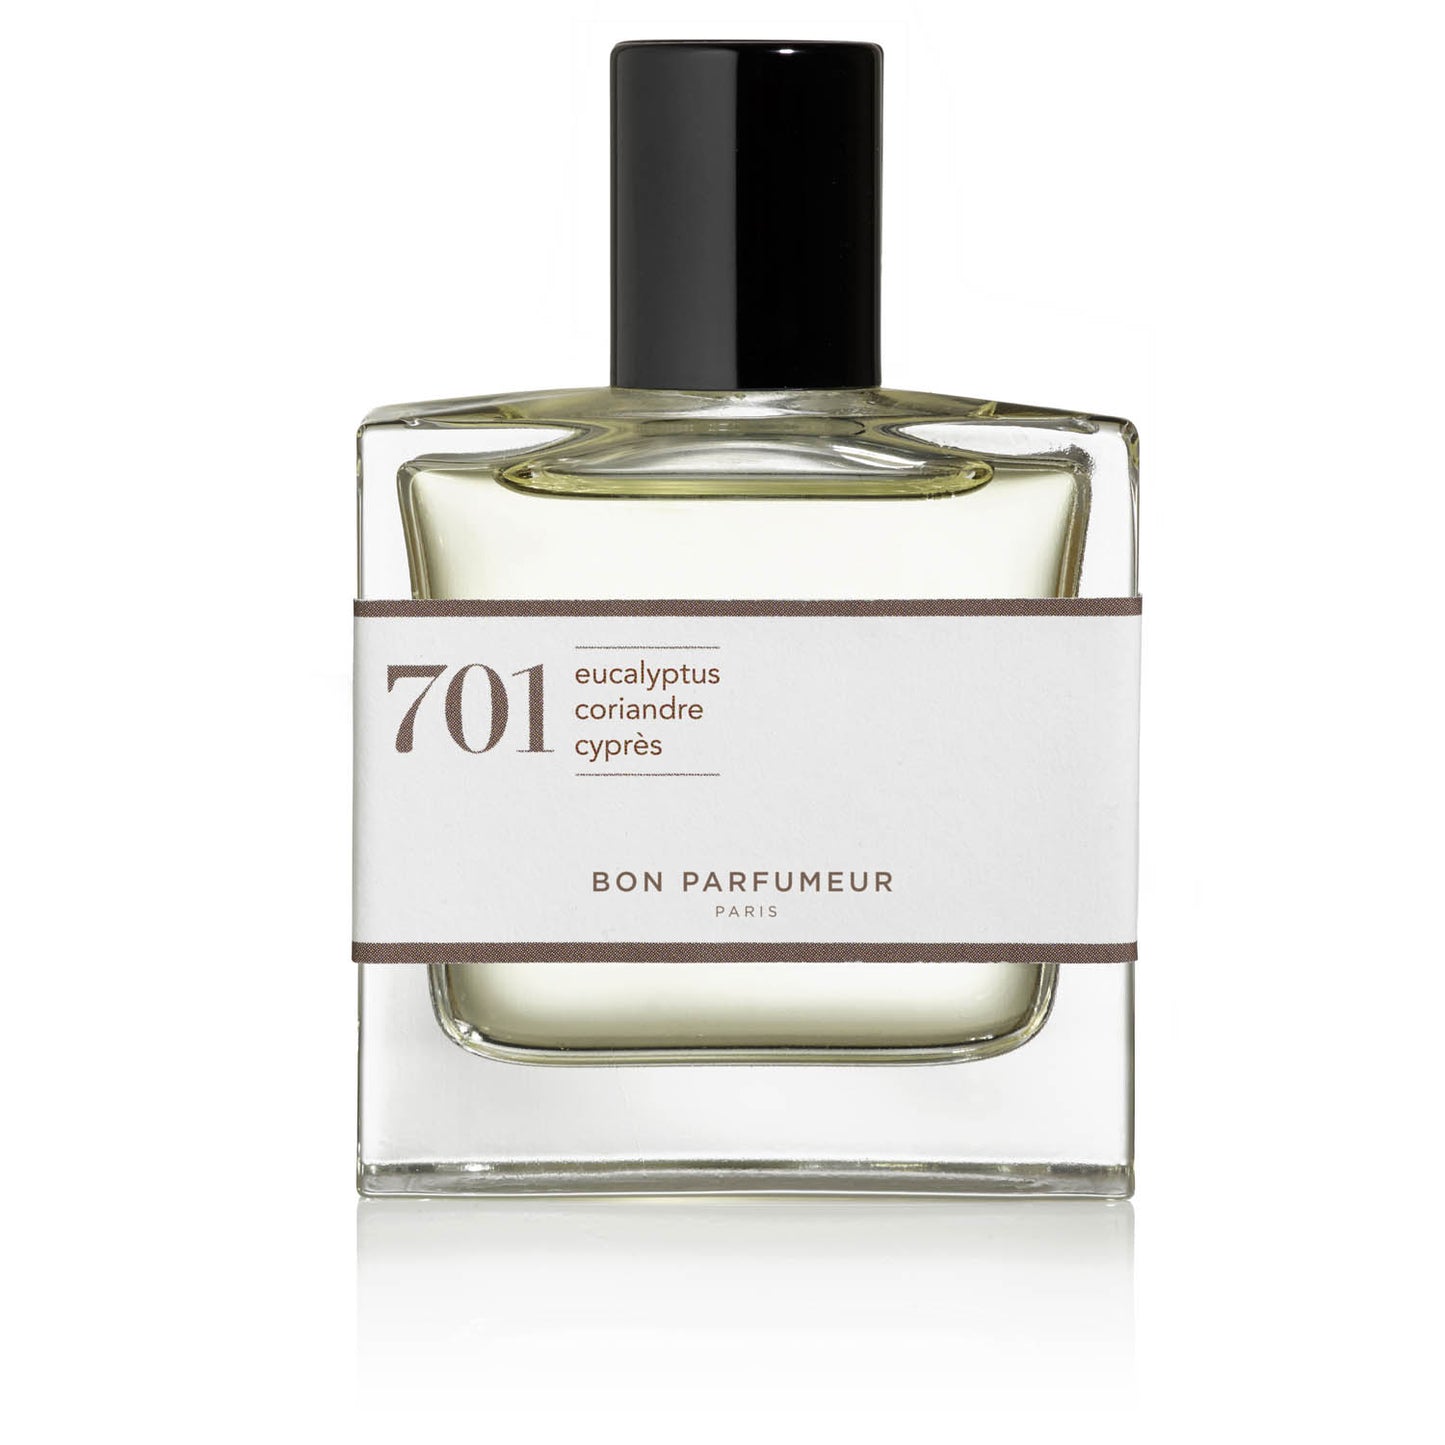 Bon Parfumeur - 701 eucalyptus coriander cypress 30 ml